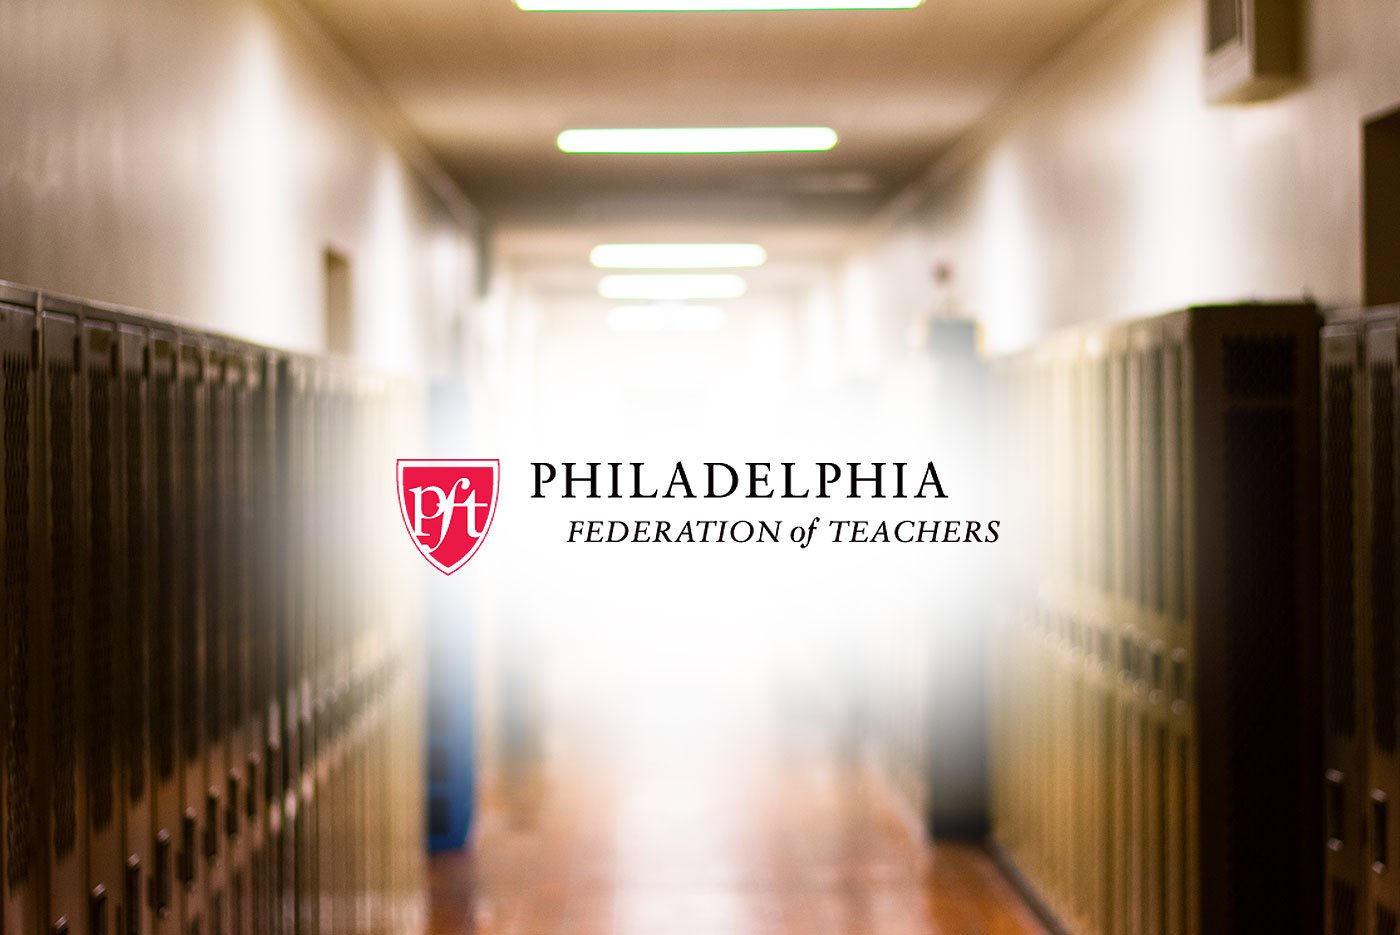 Philadelphia Teachers Federation seeks funds for asbestos removal